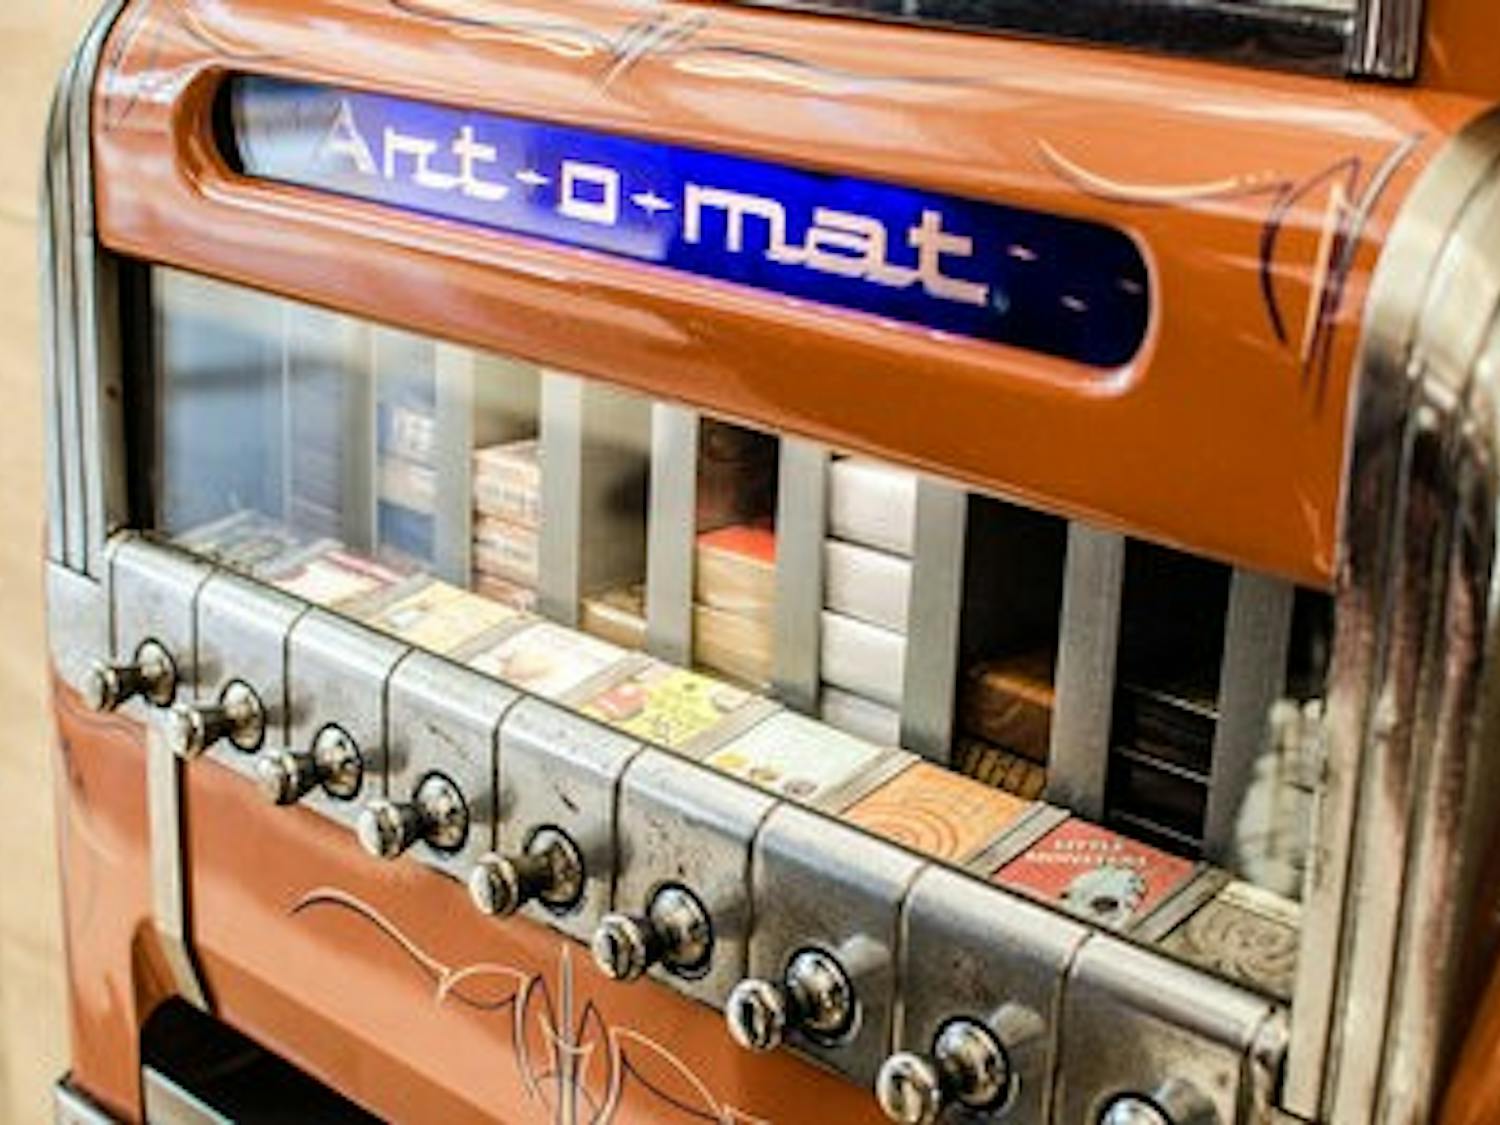 An Art-o-mat is a vintage cigarette machine transformed into vendors of handmade art.